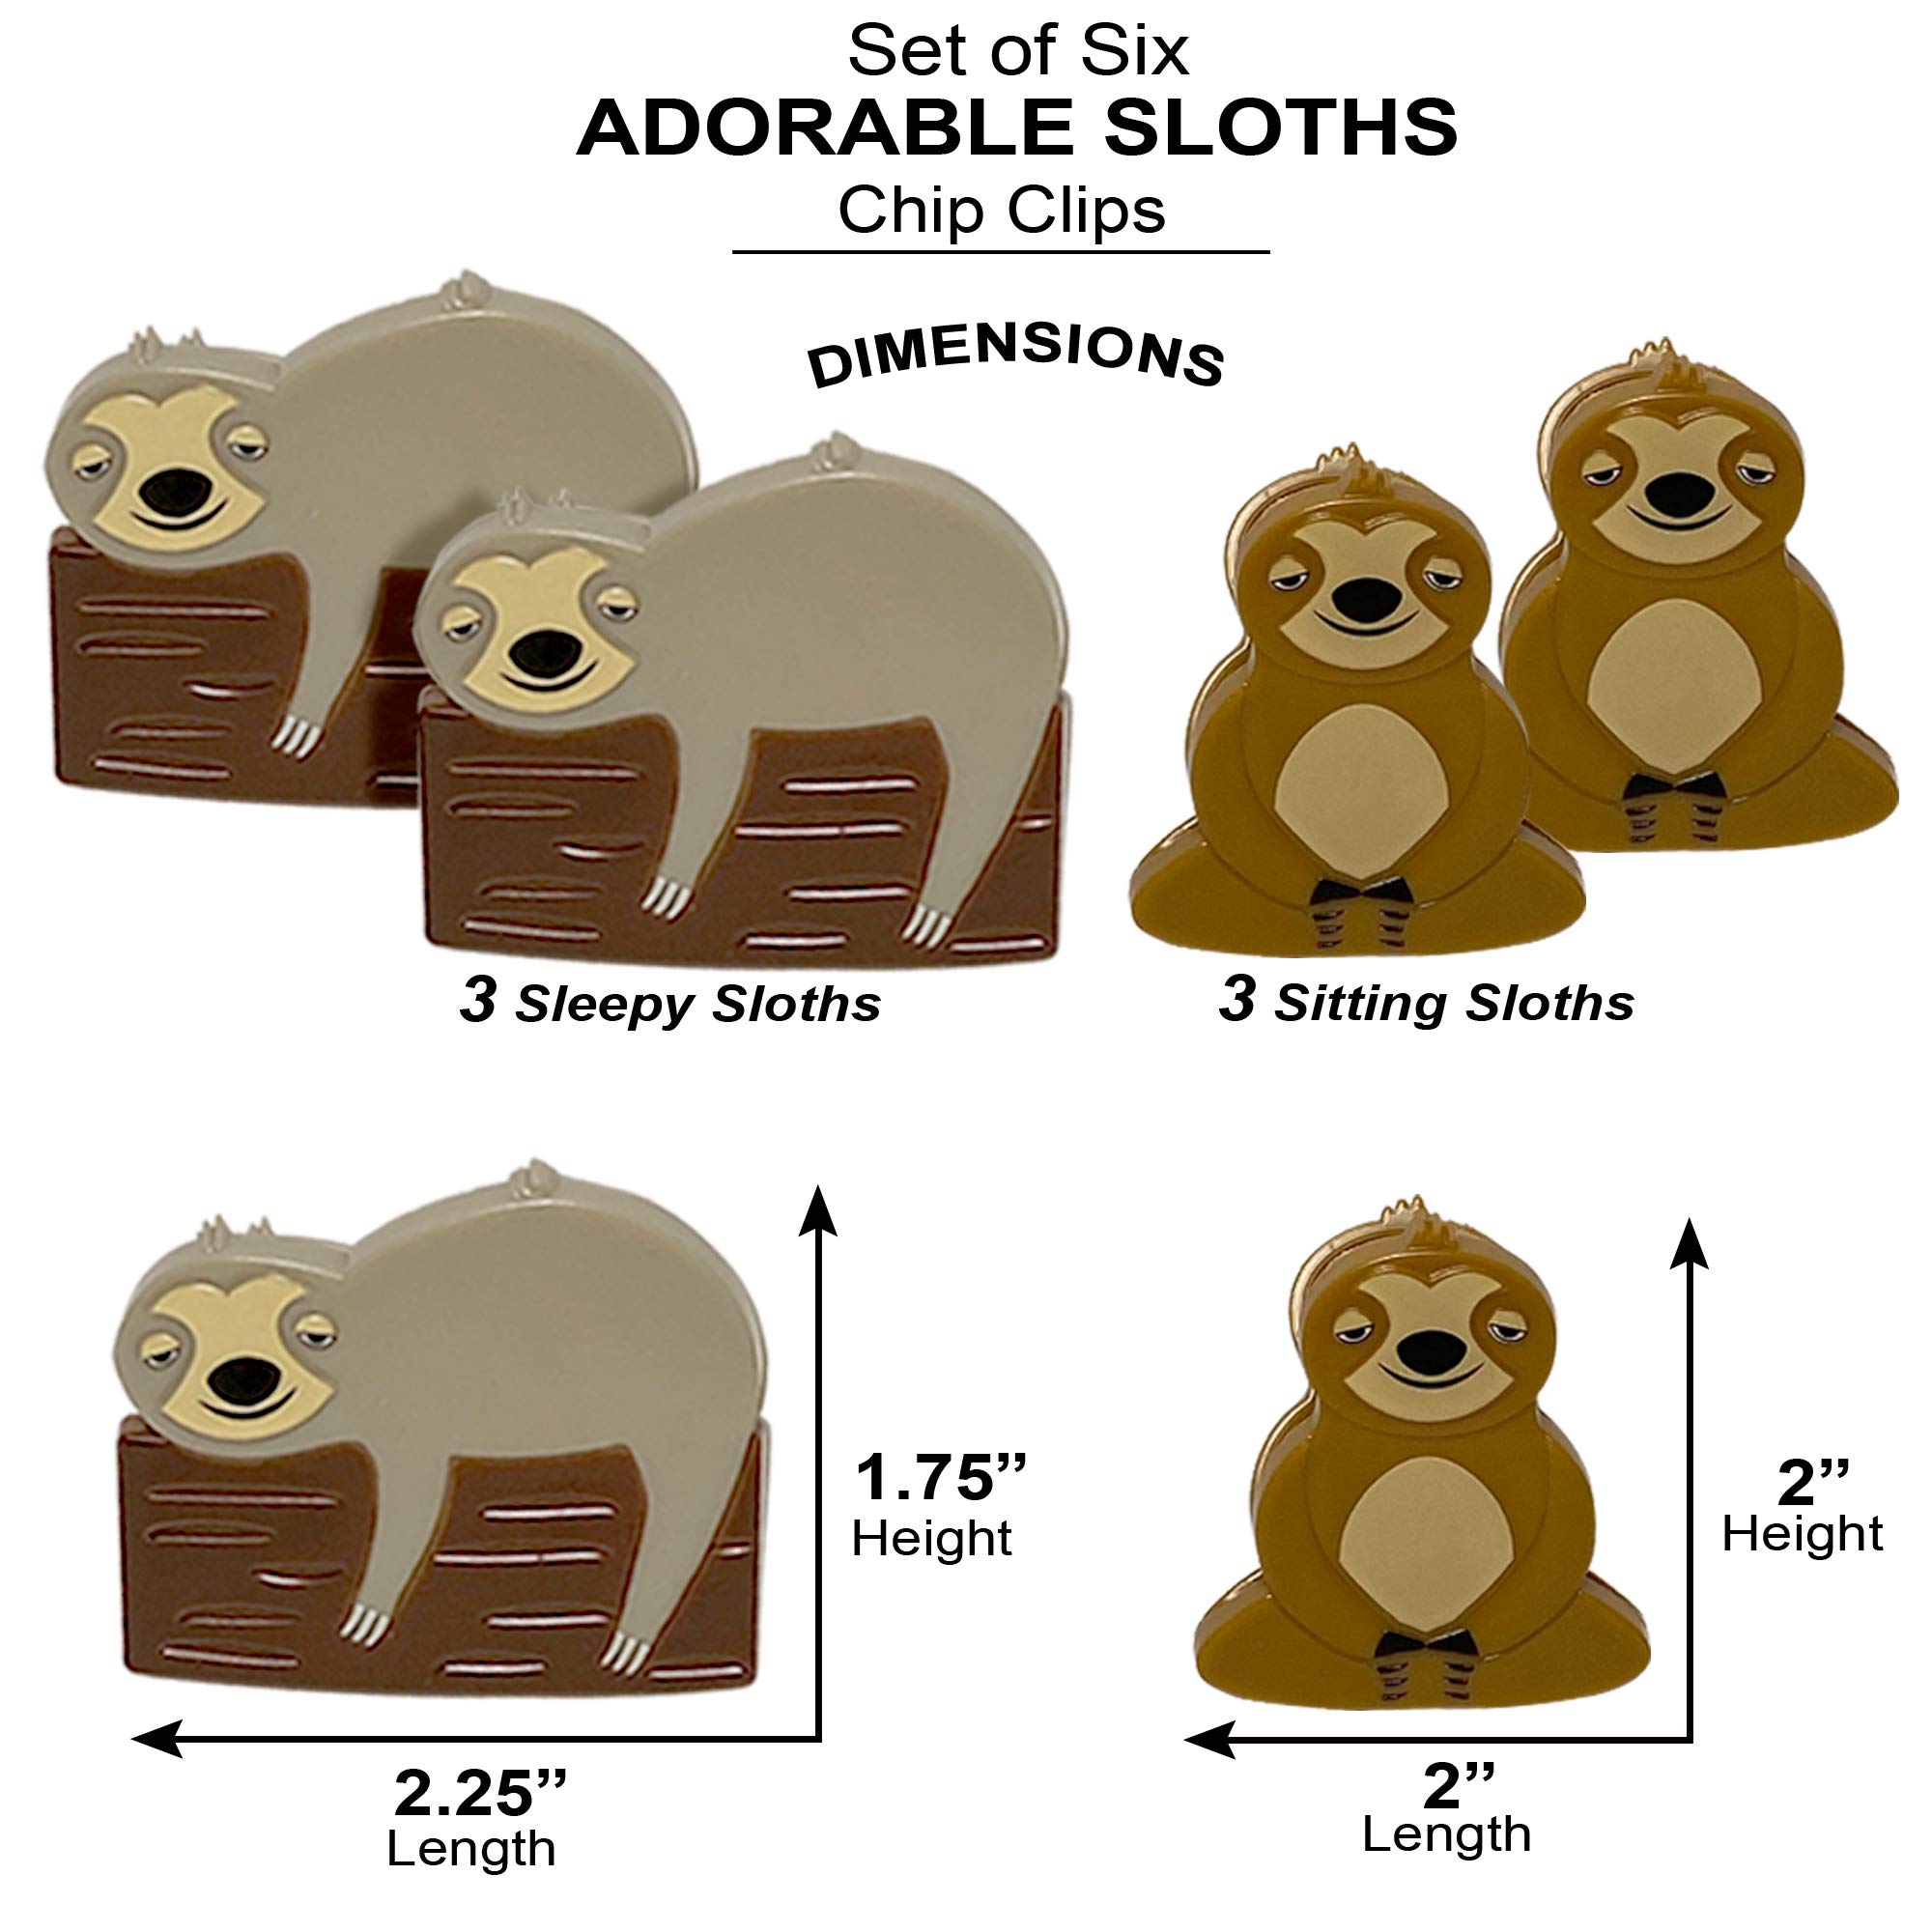 Sloth Bag Clips, 6 Woodland Sloth Chip Clip Set, Tight Food Saver, Snack Bag Sealer, Chip Clips Bag Clips Food Clips, Air Tight, Cute Sloth Party Supplies, Fun Sloth Stuff, Bag Clips for Food Storage